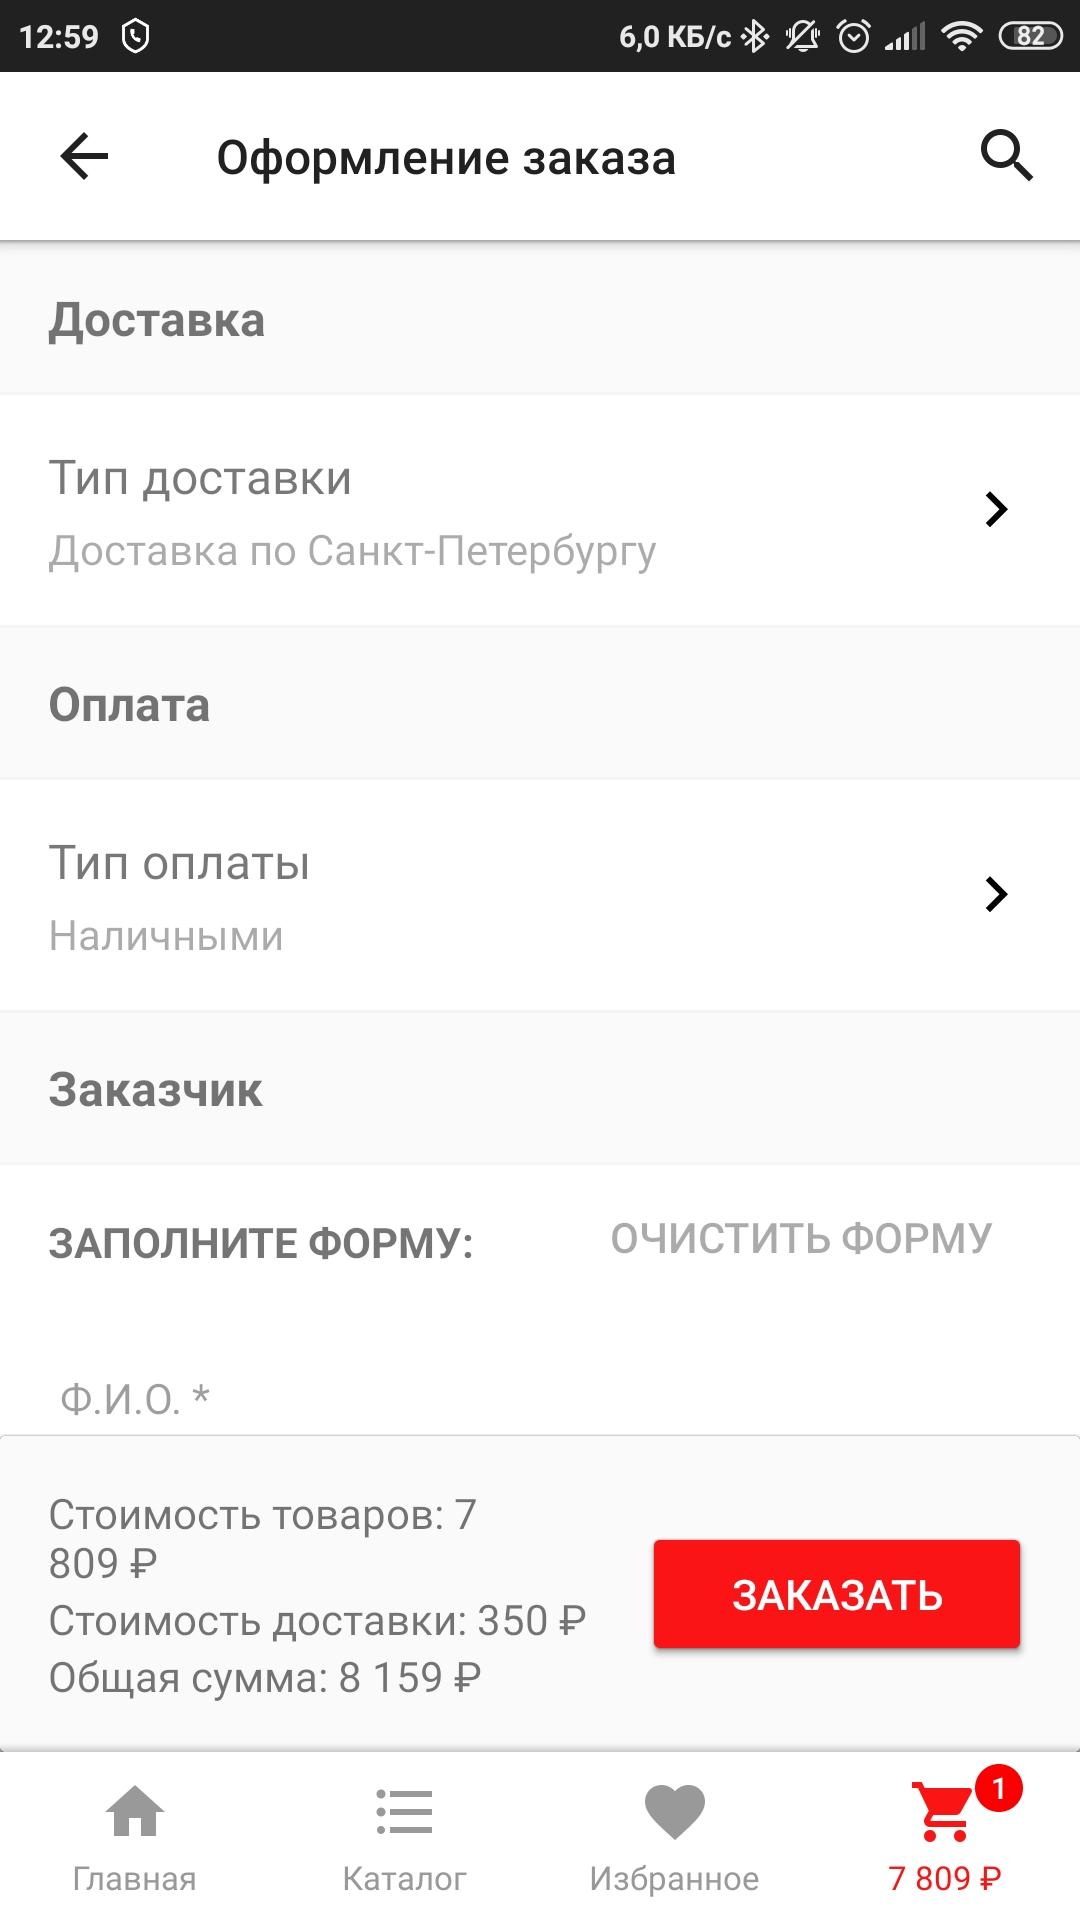 DTLshop.ru - detaling market 4.177.A.0 Screenshot 7